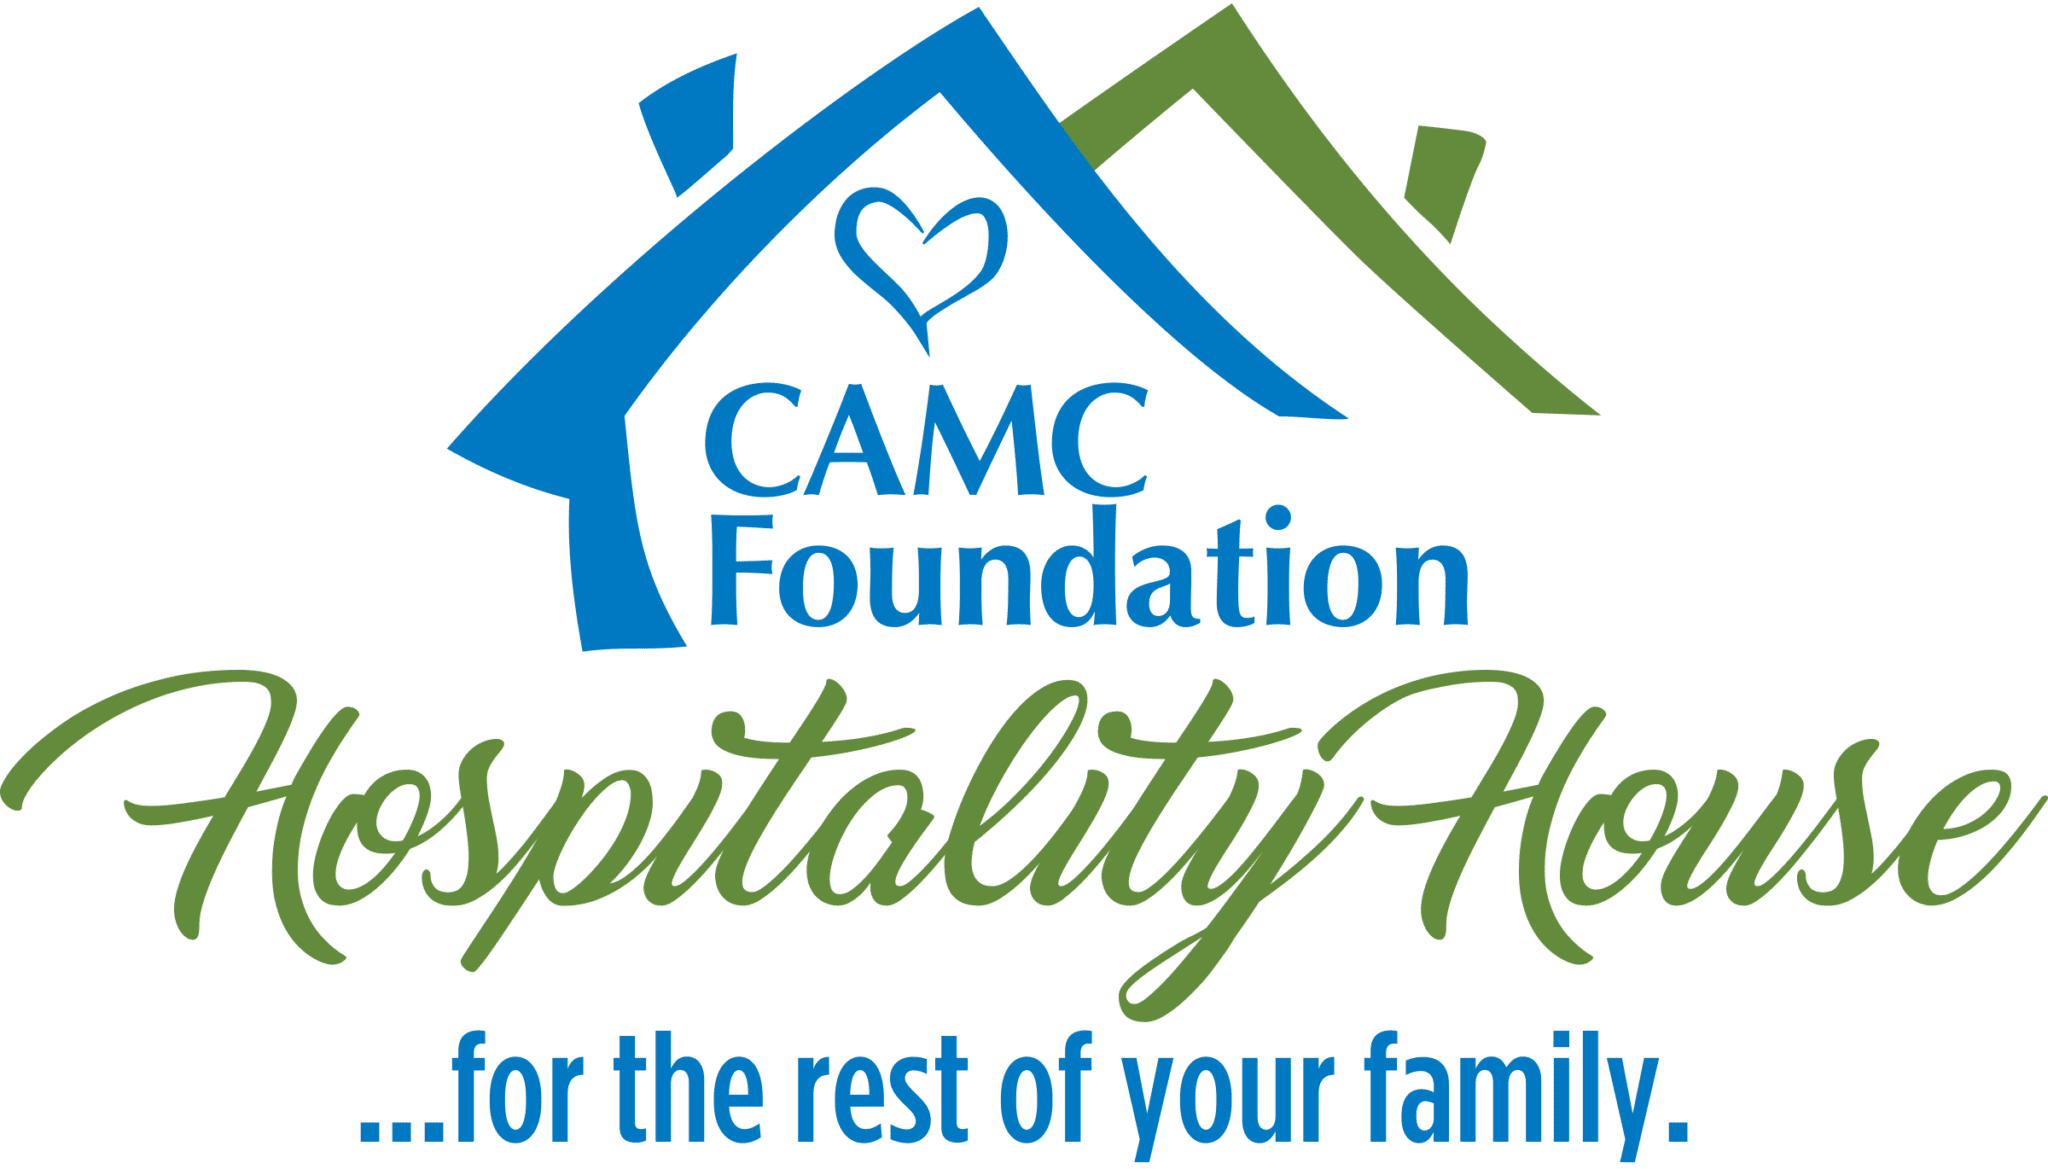 HOSPITALITY HOUSE Logo With Tagline Copy